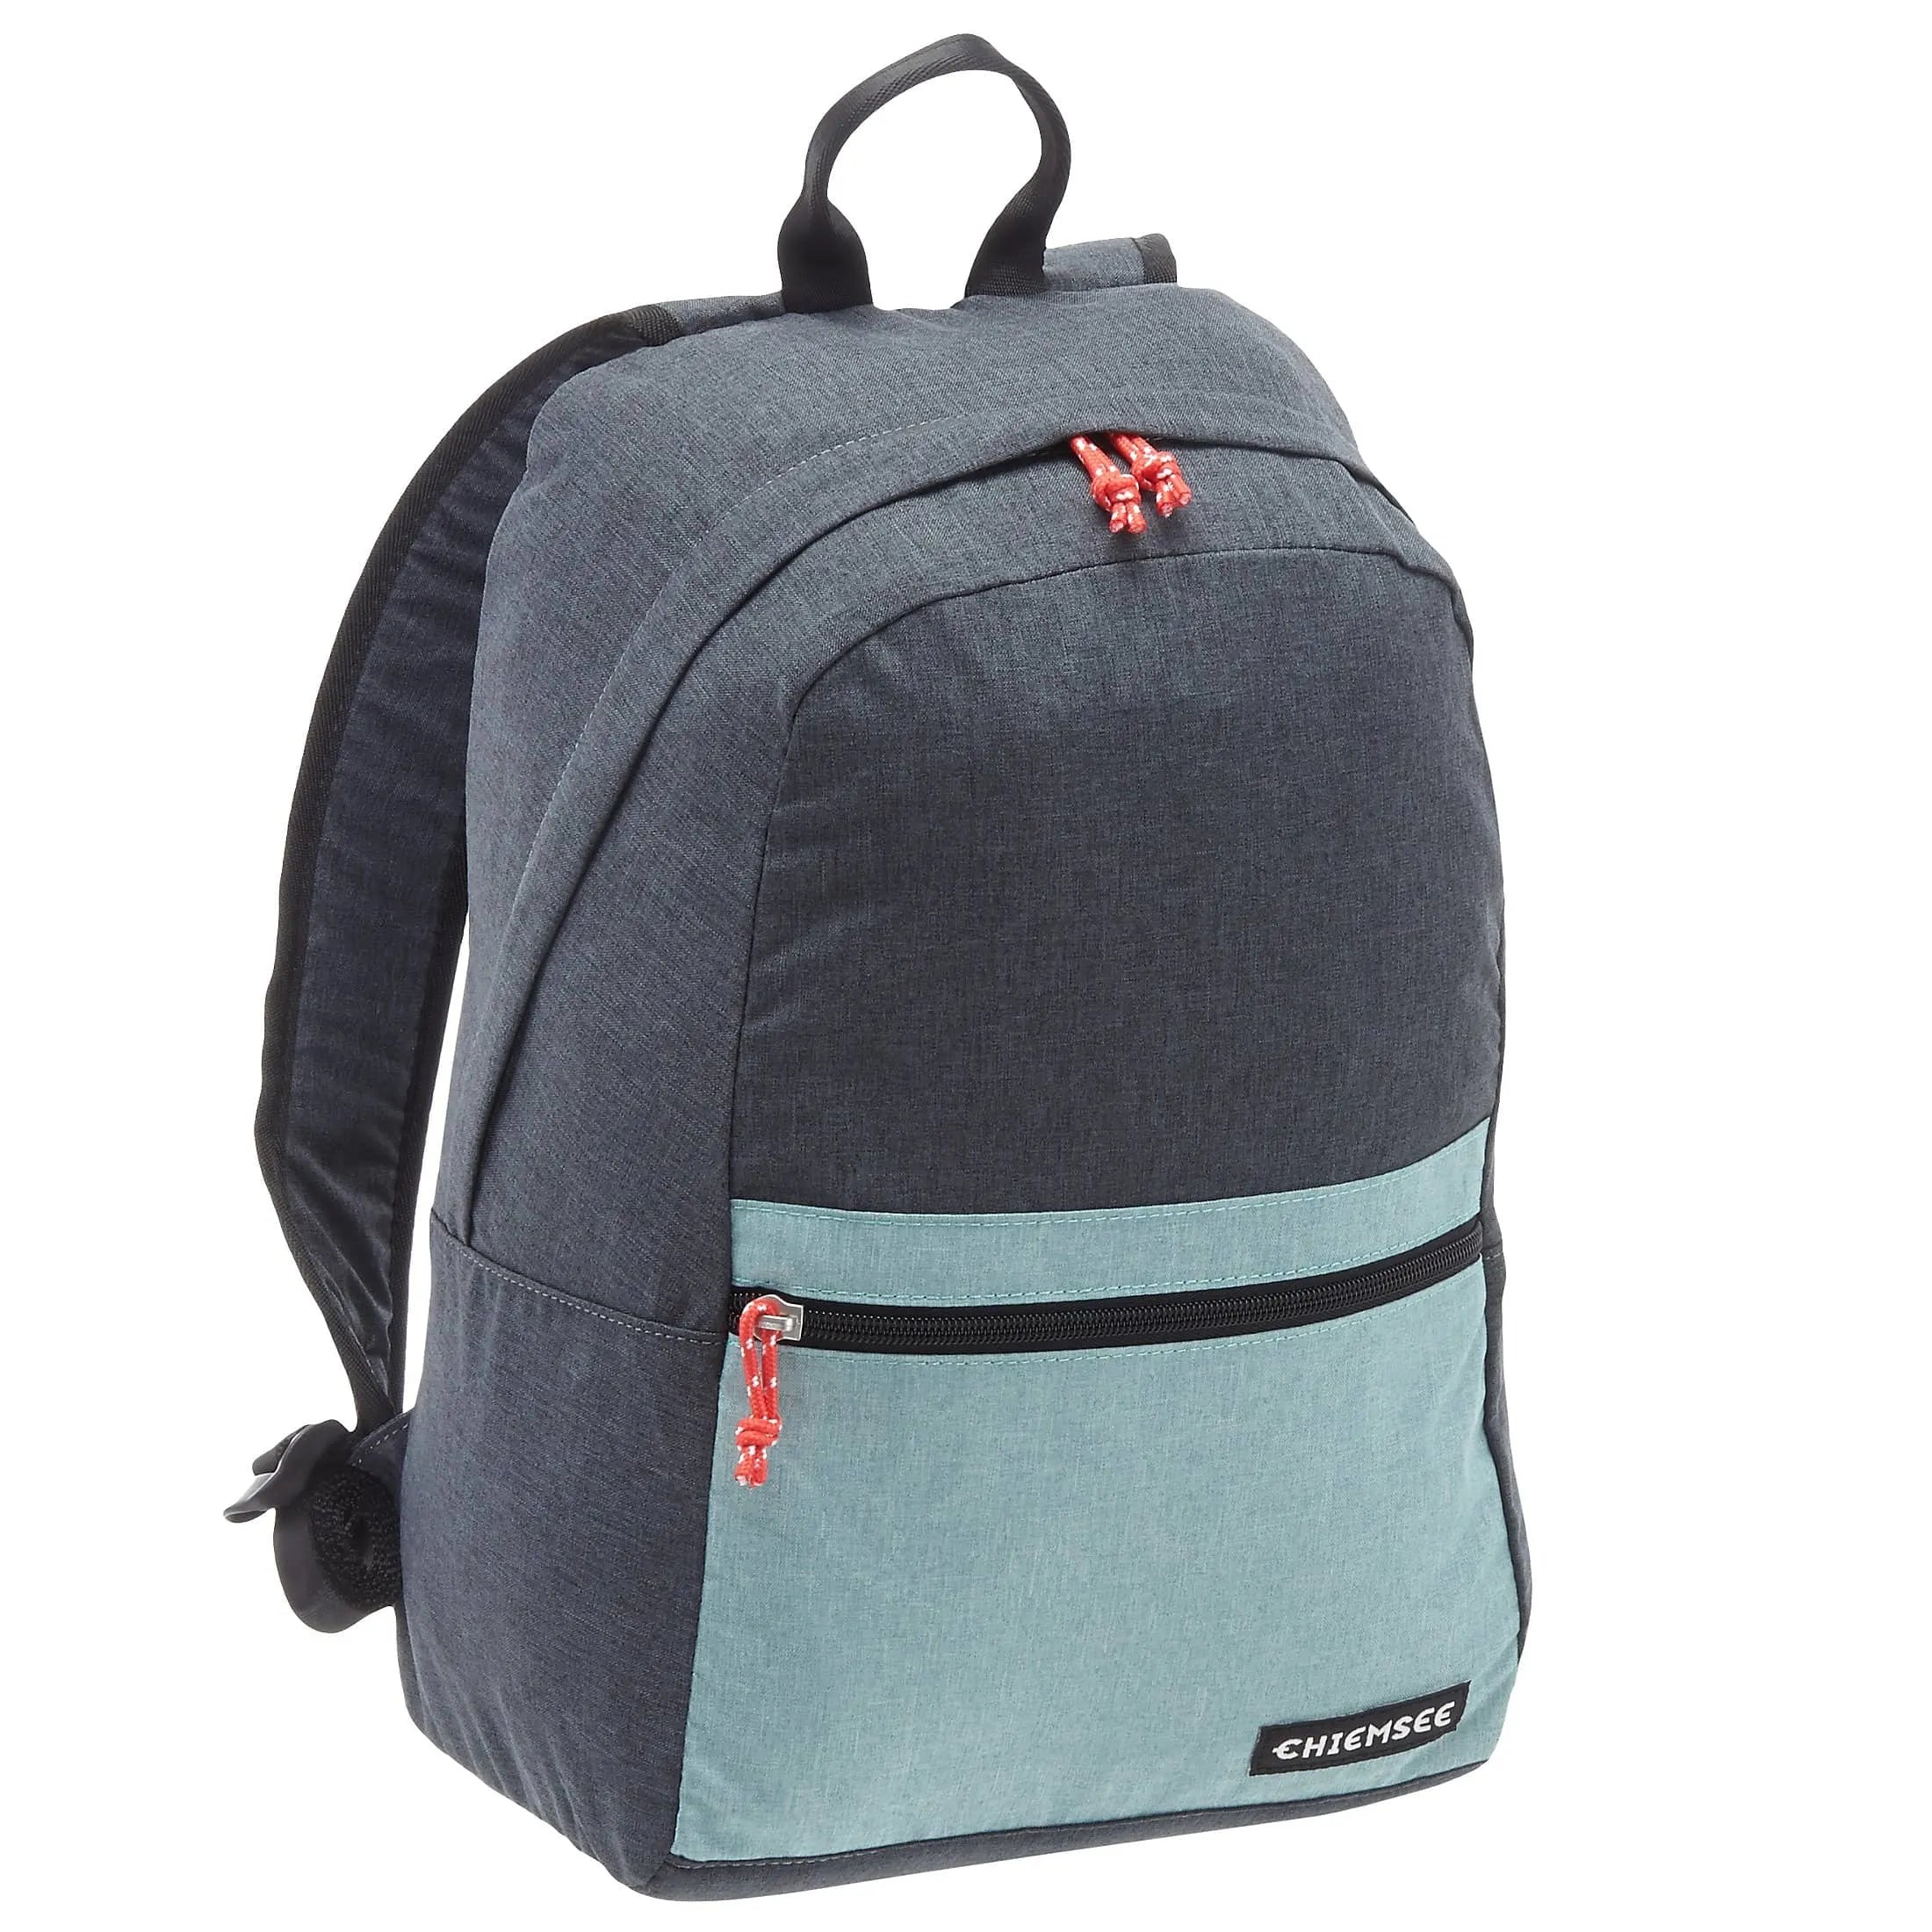 Chiemsee Sports & Travel Bags Easy Rucksack 42 cm - coronet blue